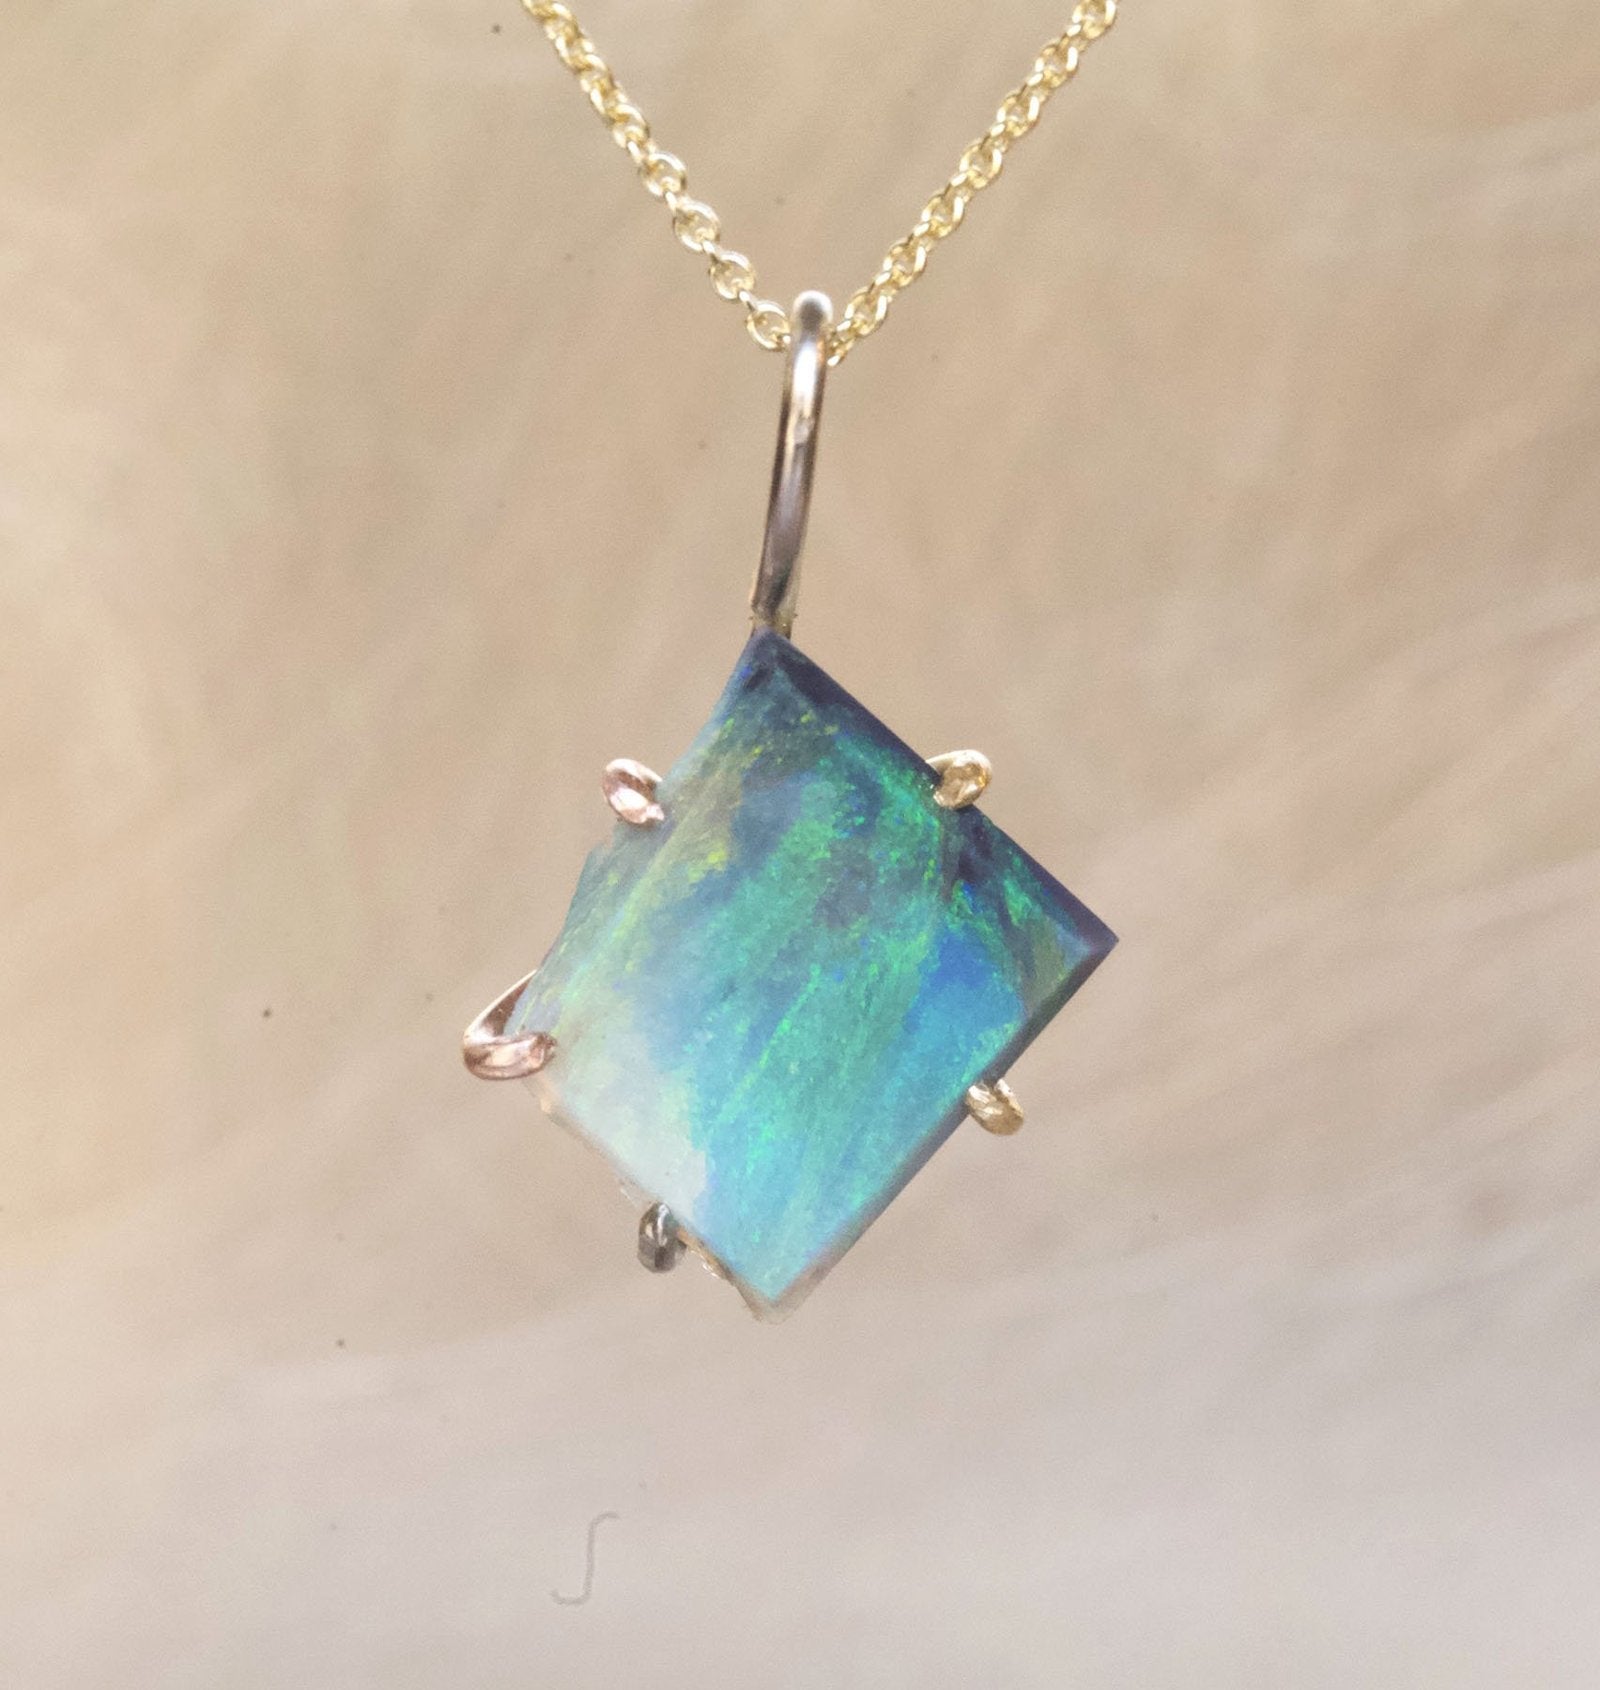 Exceptional opal pendant